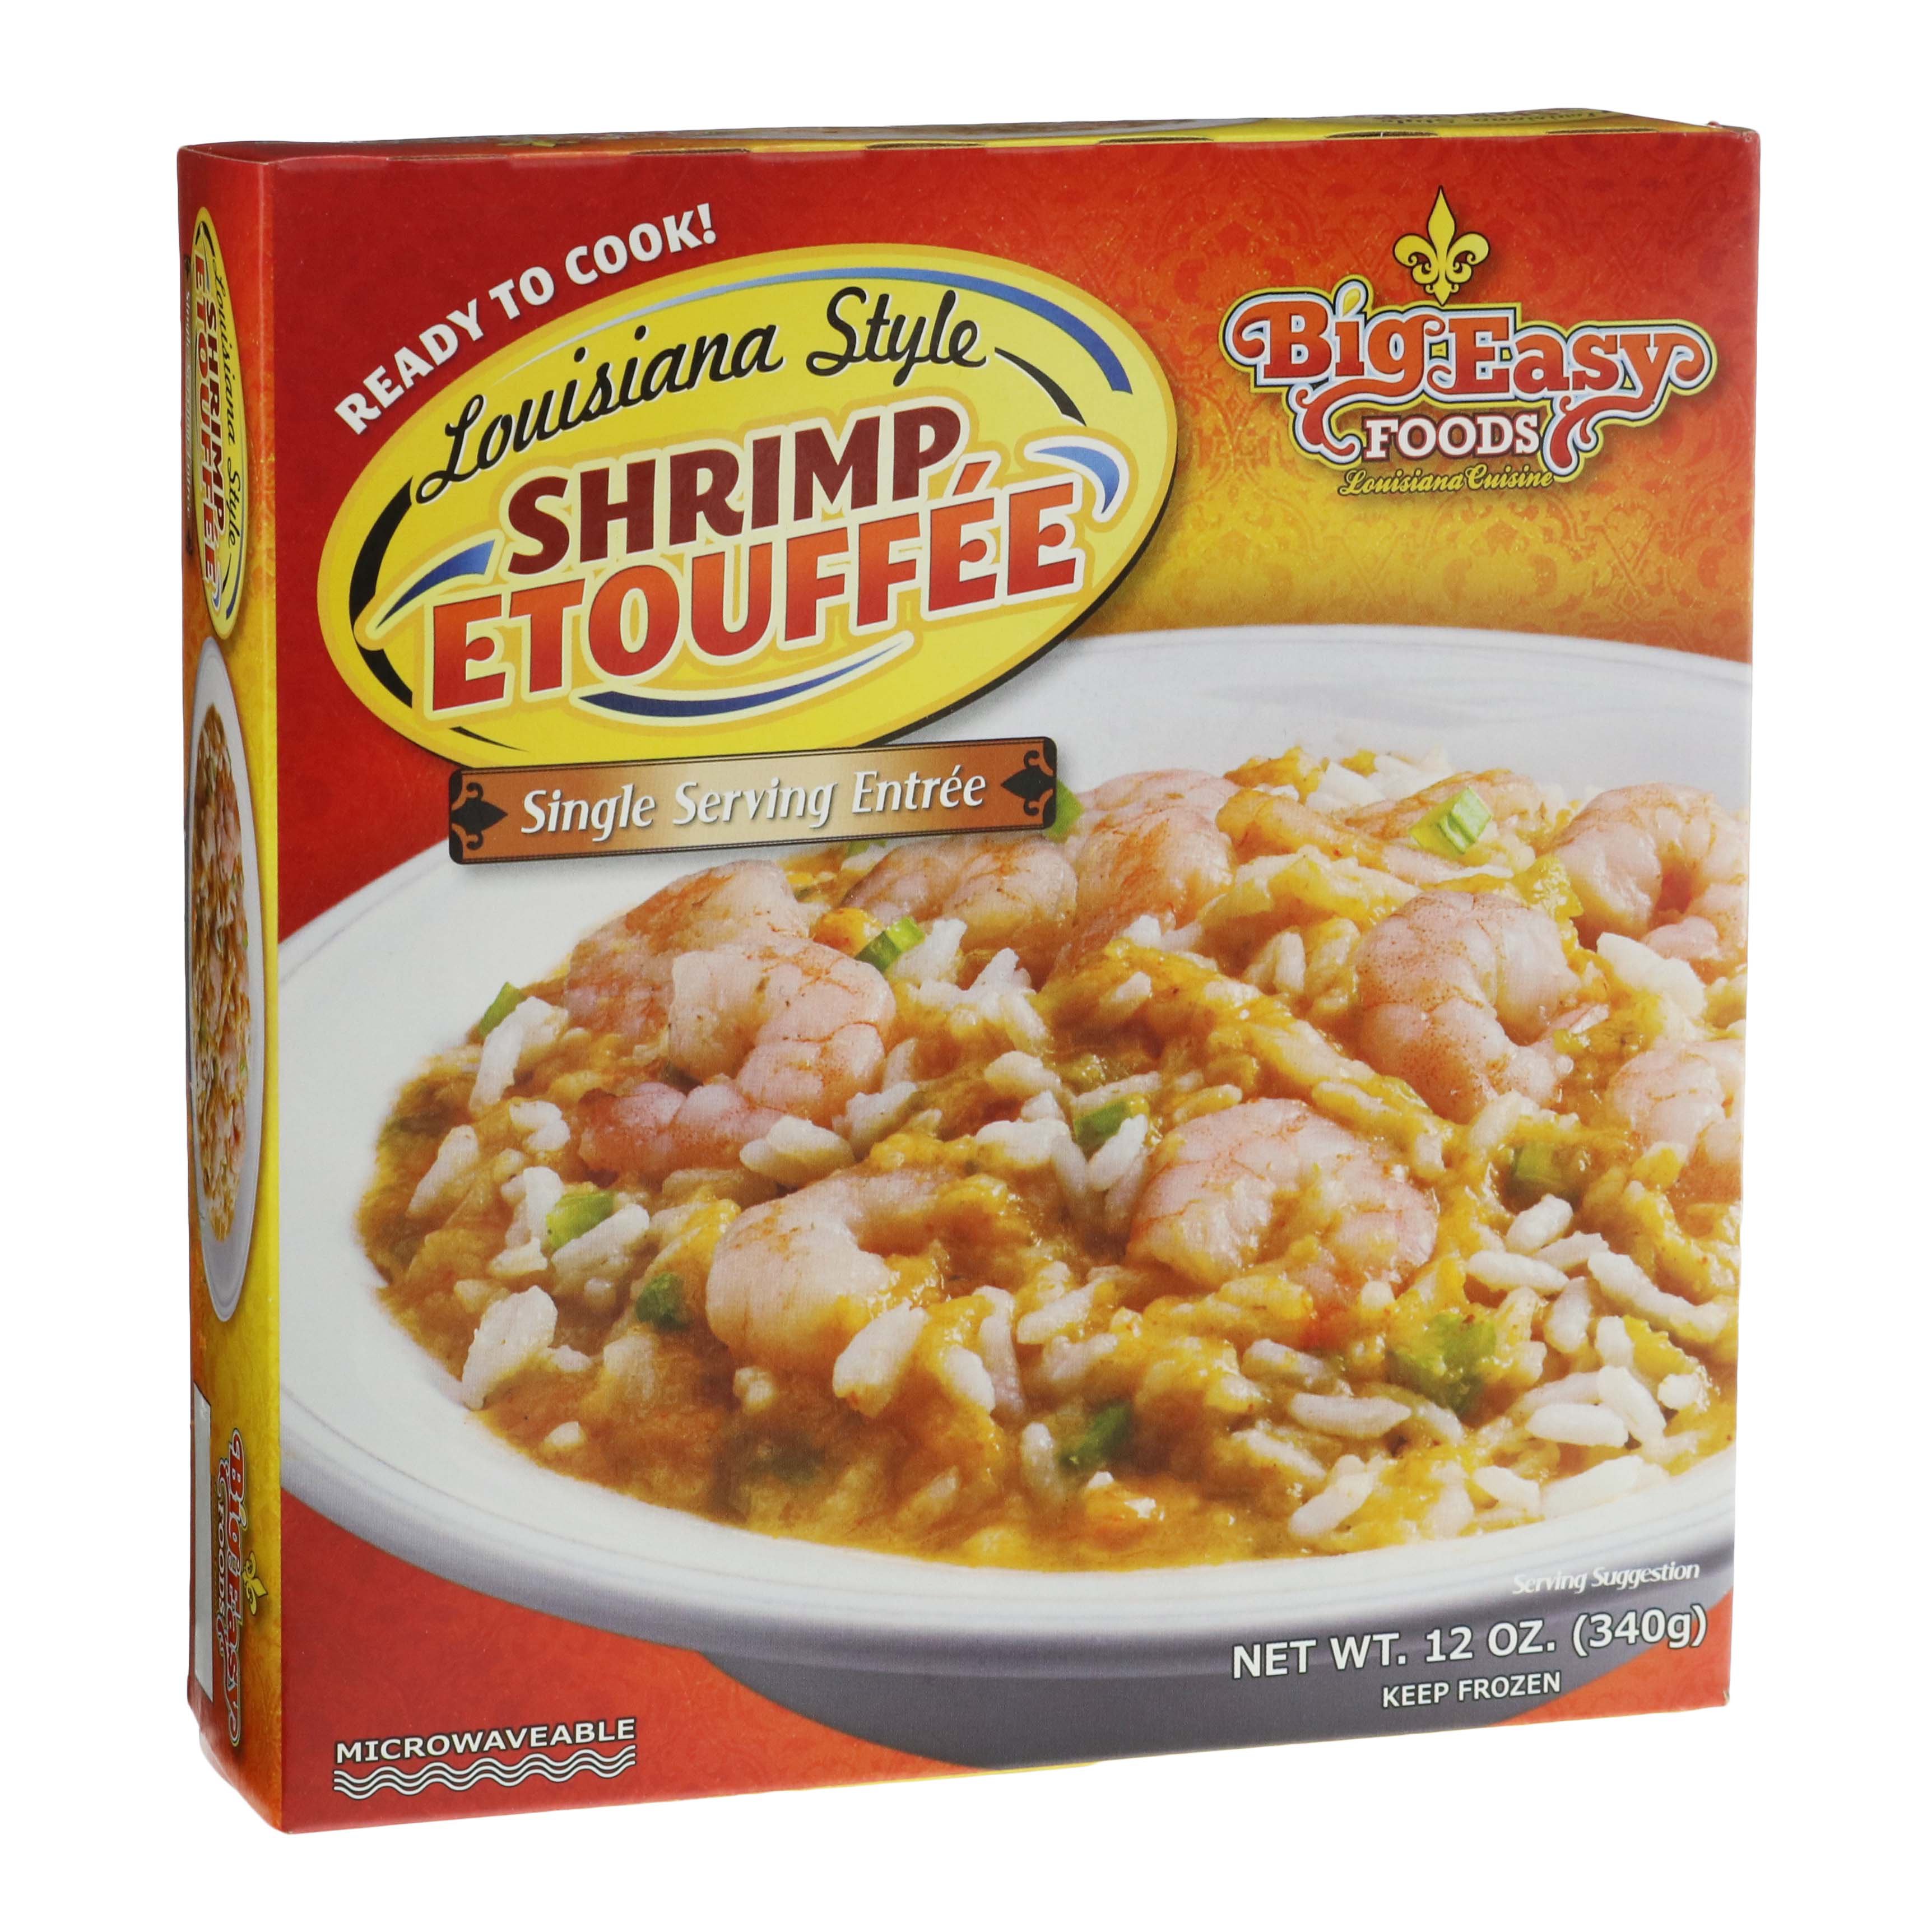 Big Easy Foods Shrimp Etouffee - Shop Entrees & Sides at H-E-B